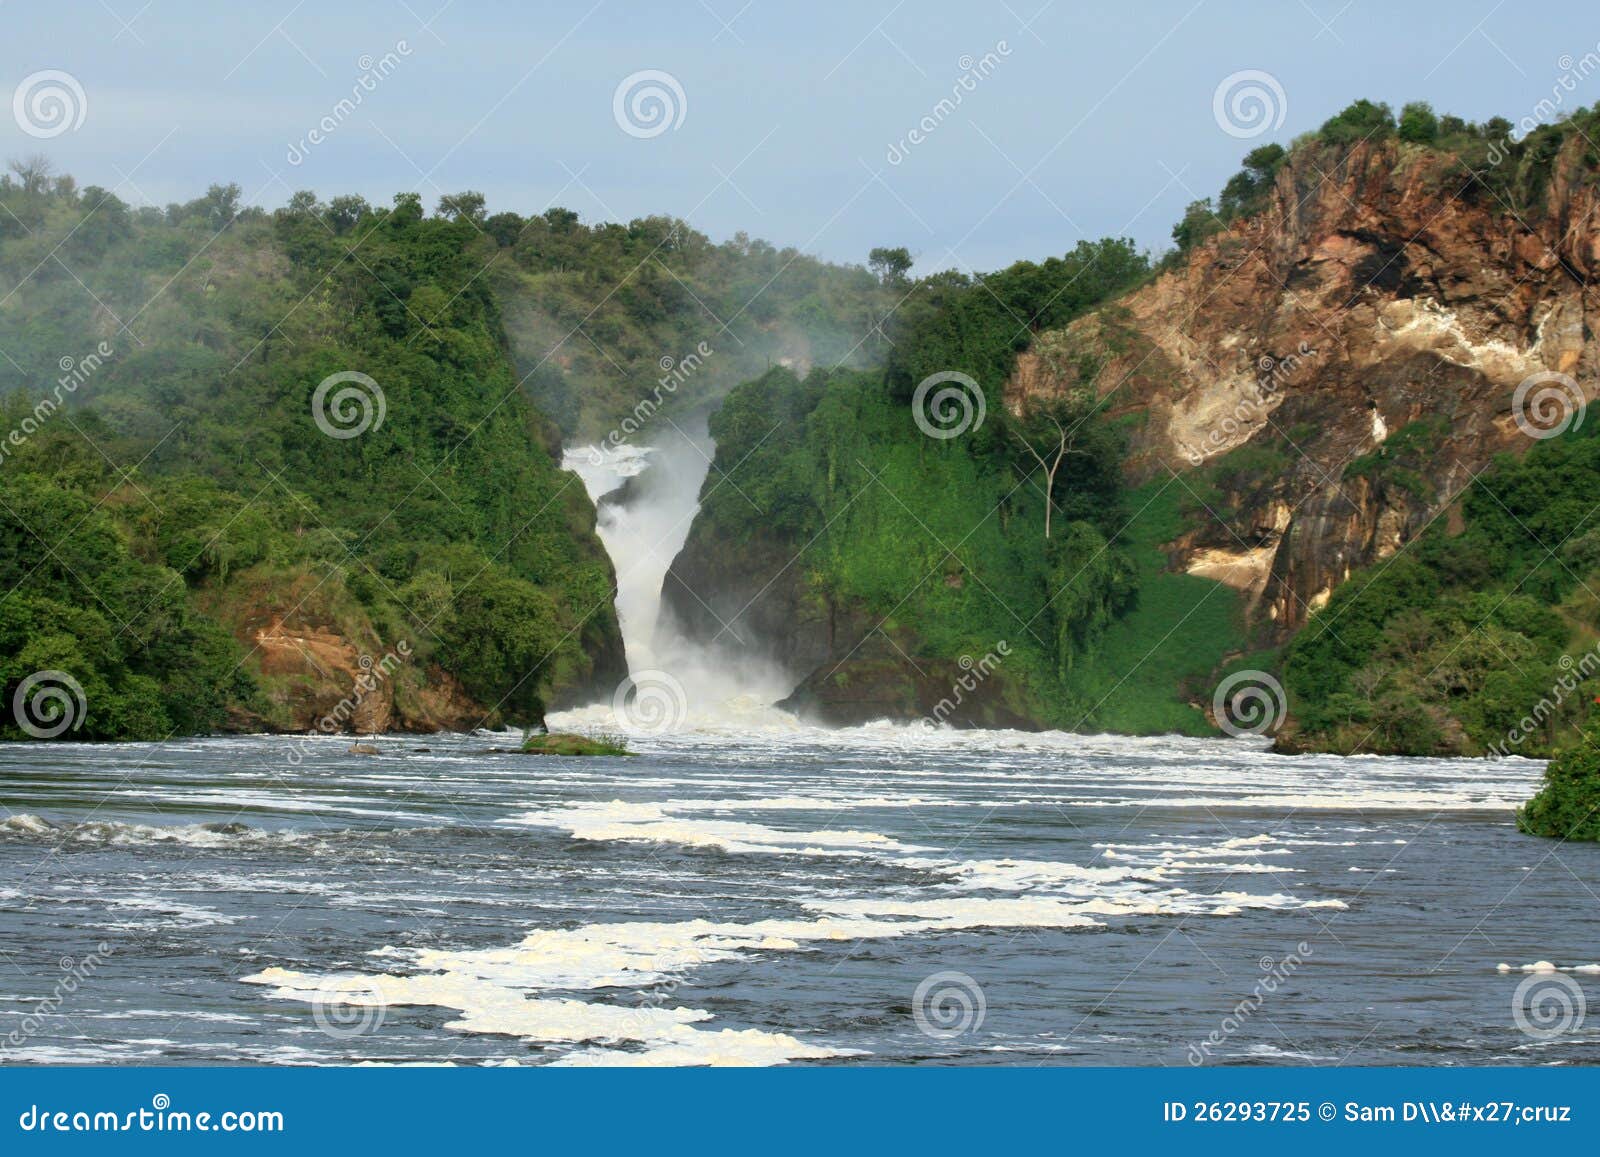 murchison falls np, uganda, africa